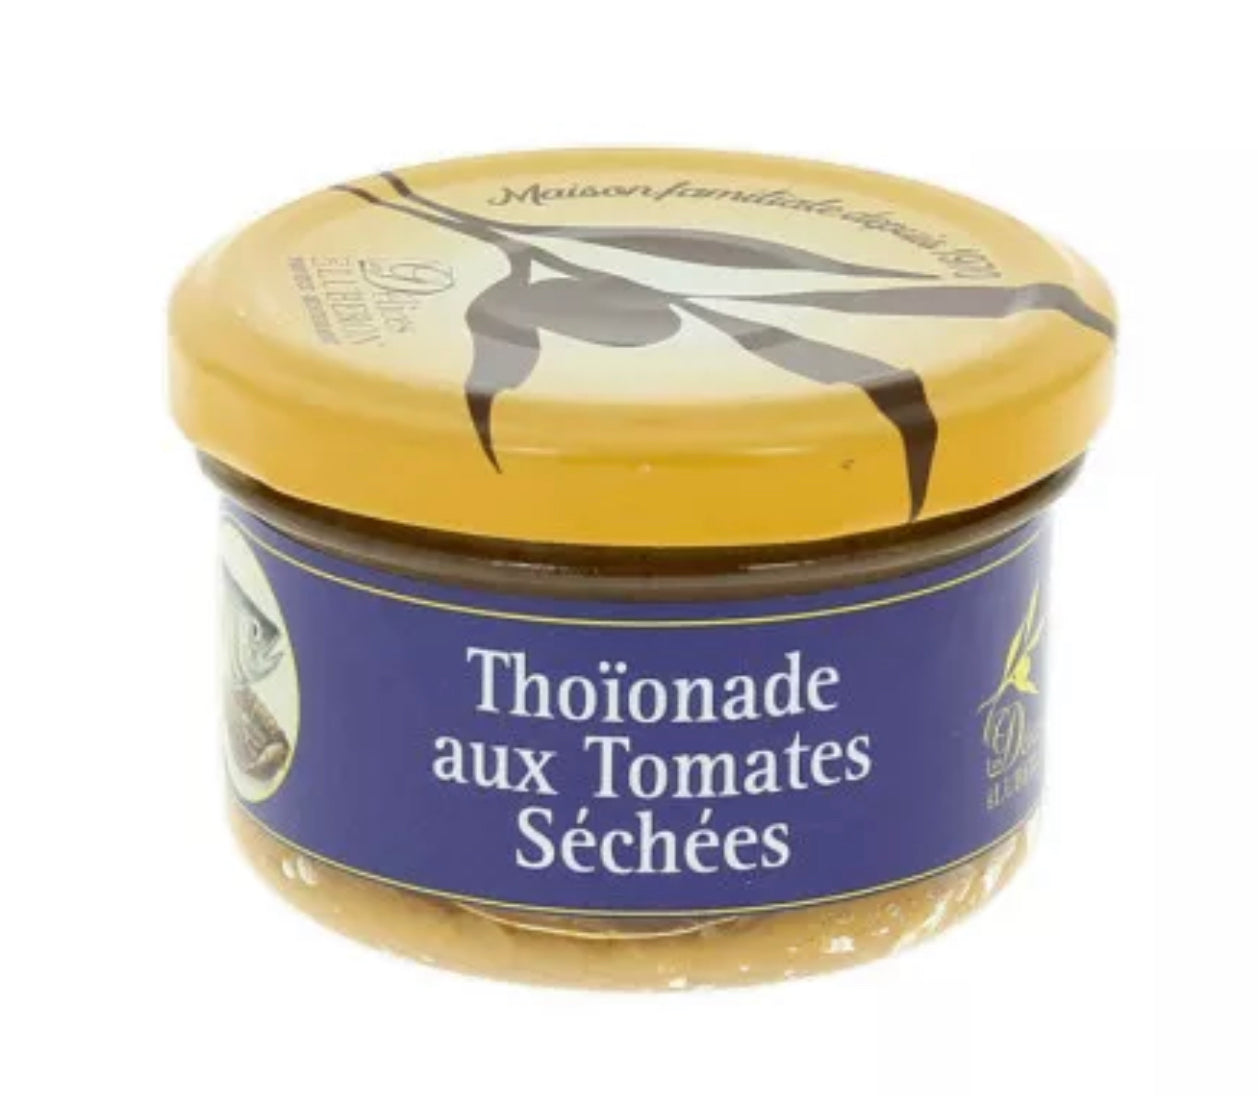 Thoïonade - Tuna spread with dried tomatoes - 90g